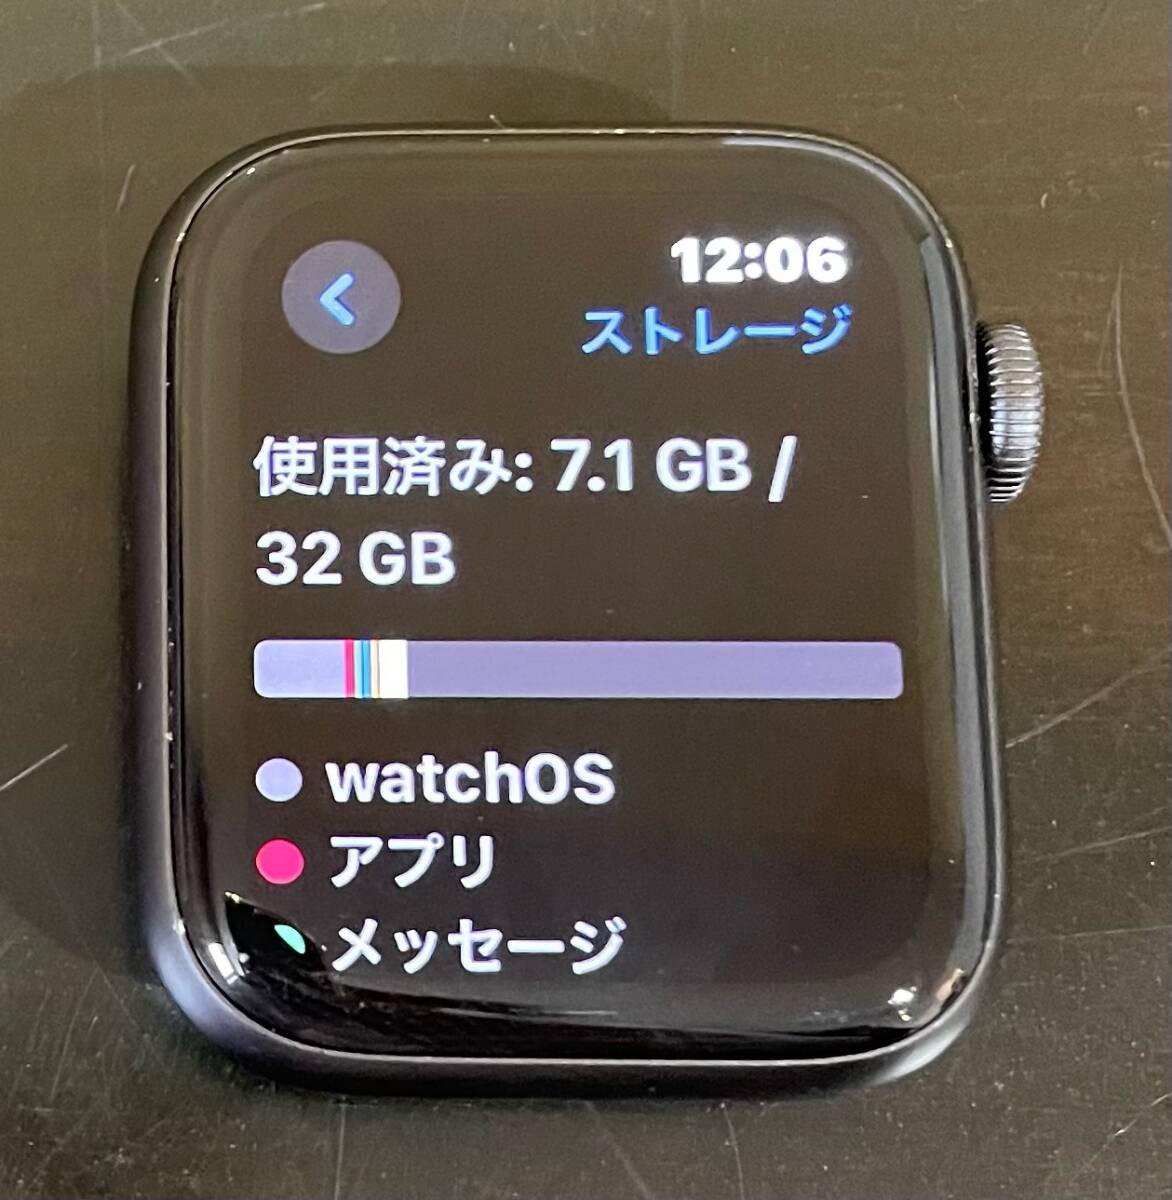  cheap!! 99 jpy start!! Apple Watch Apple watch series 6 GPS model 40mm A2291 32GB smart watch Acty beige .n cancellation ending 